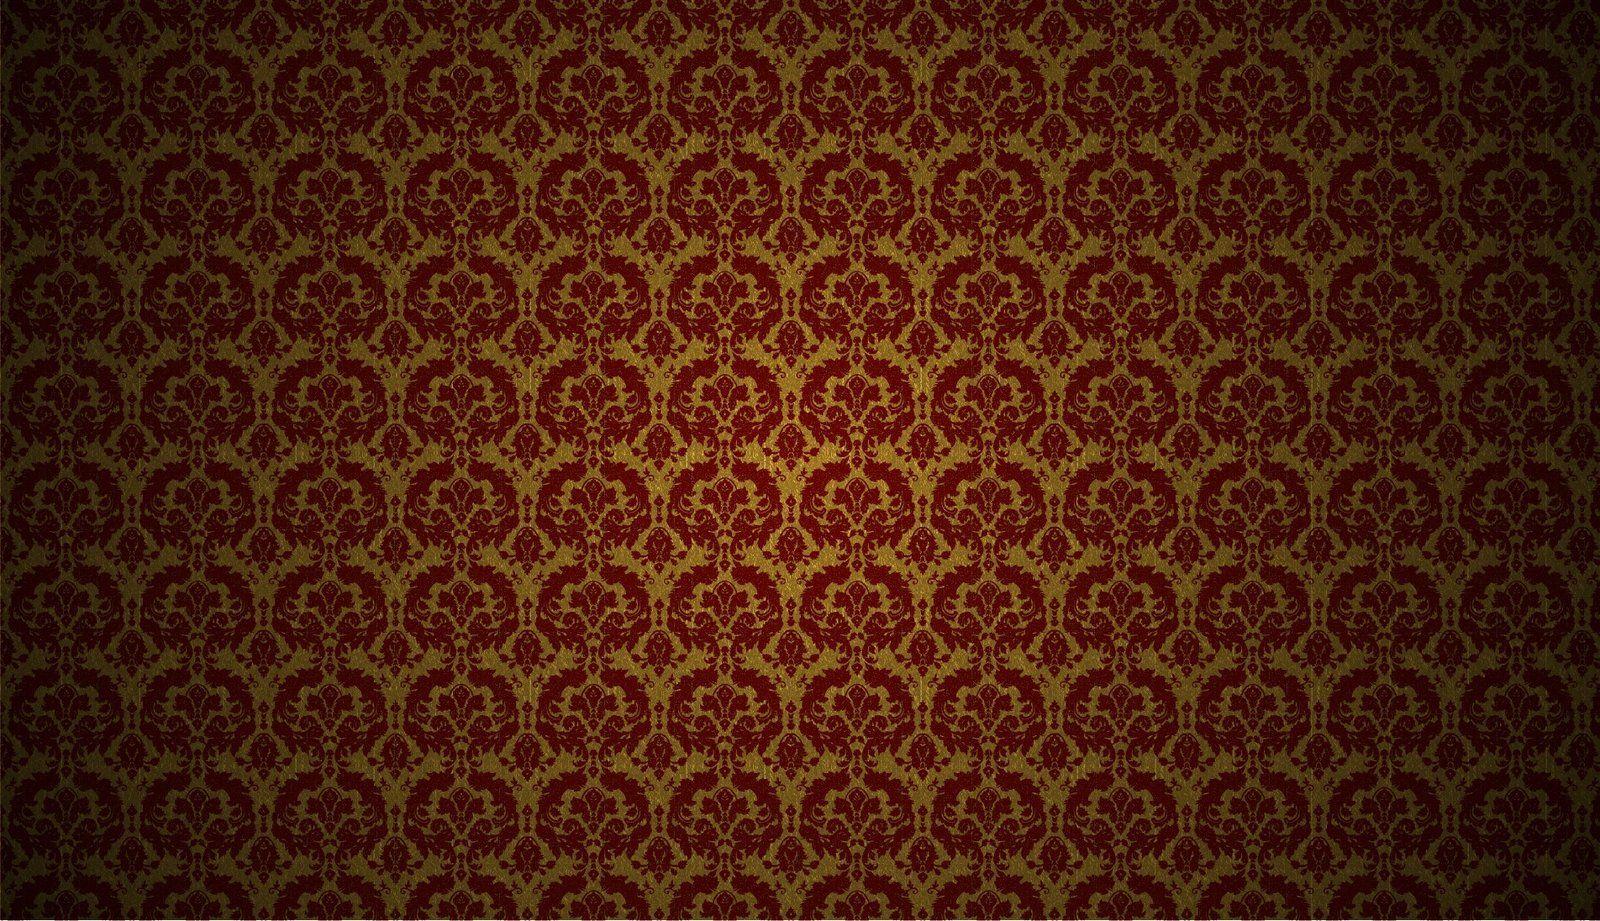 Free download Red Damask Wallpaper Red vignette damask by r2krw9 900x675  for your Desktop Mobile  Tablet  Explore 48 Red and Black Damask  Wallpaper  Black and White Damask Wallpaper Purple